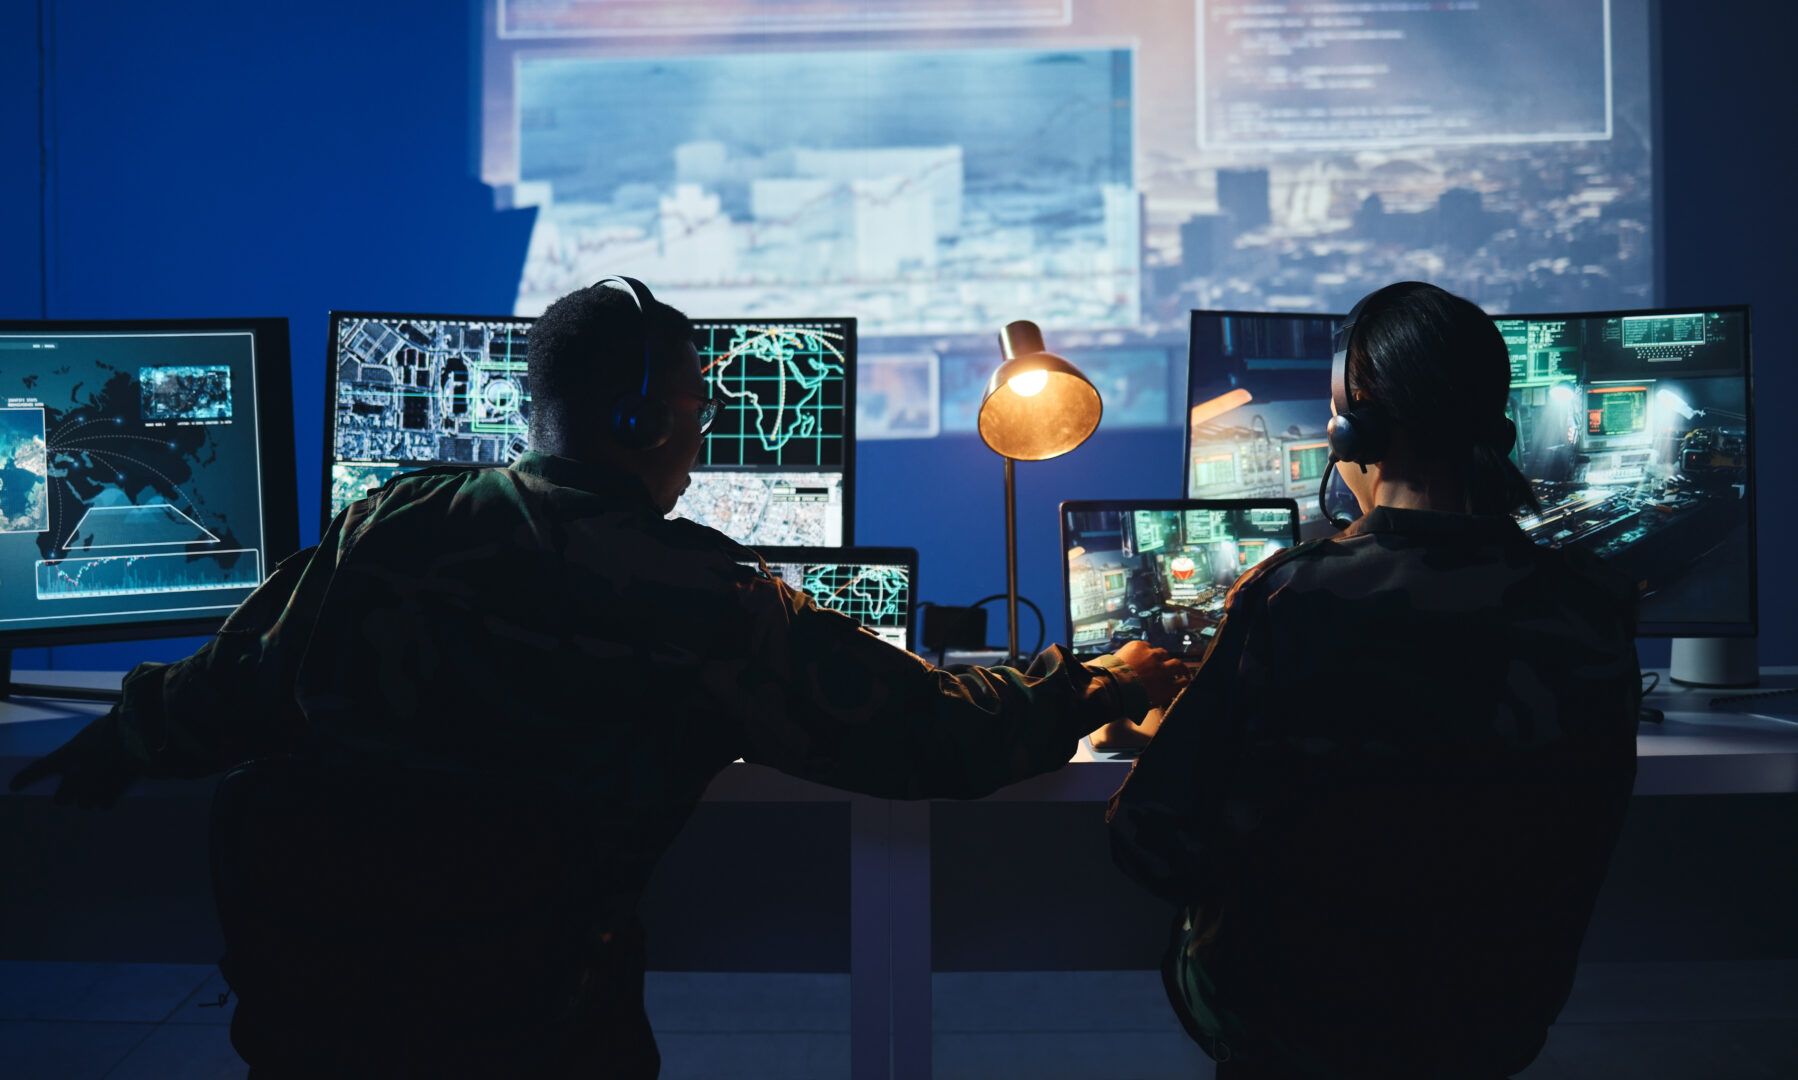 army-control-room-computer-and-team-in-surveillan-2023-09-21-02-58-01-utc